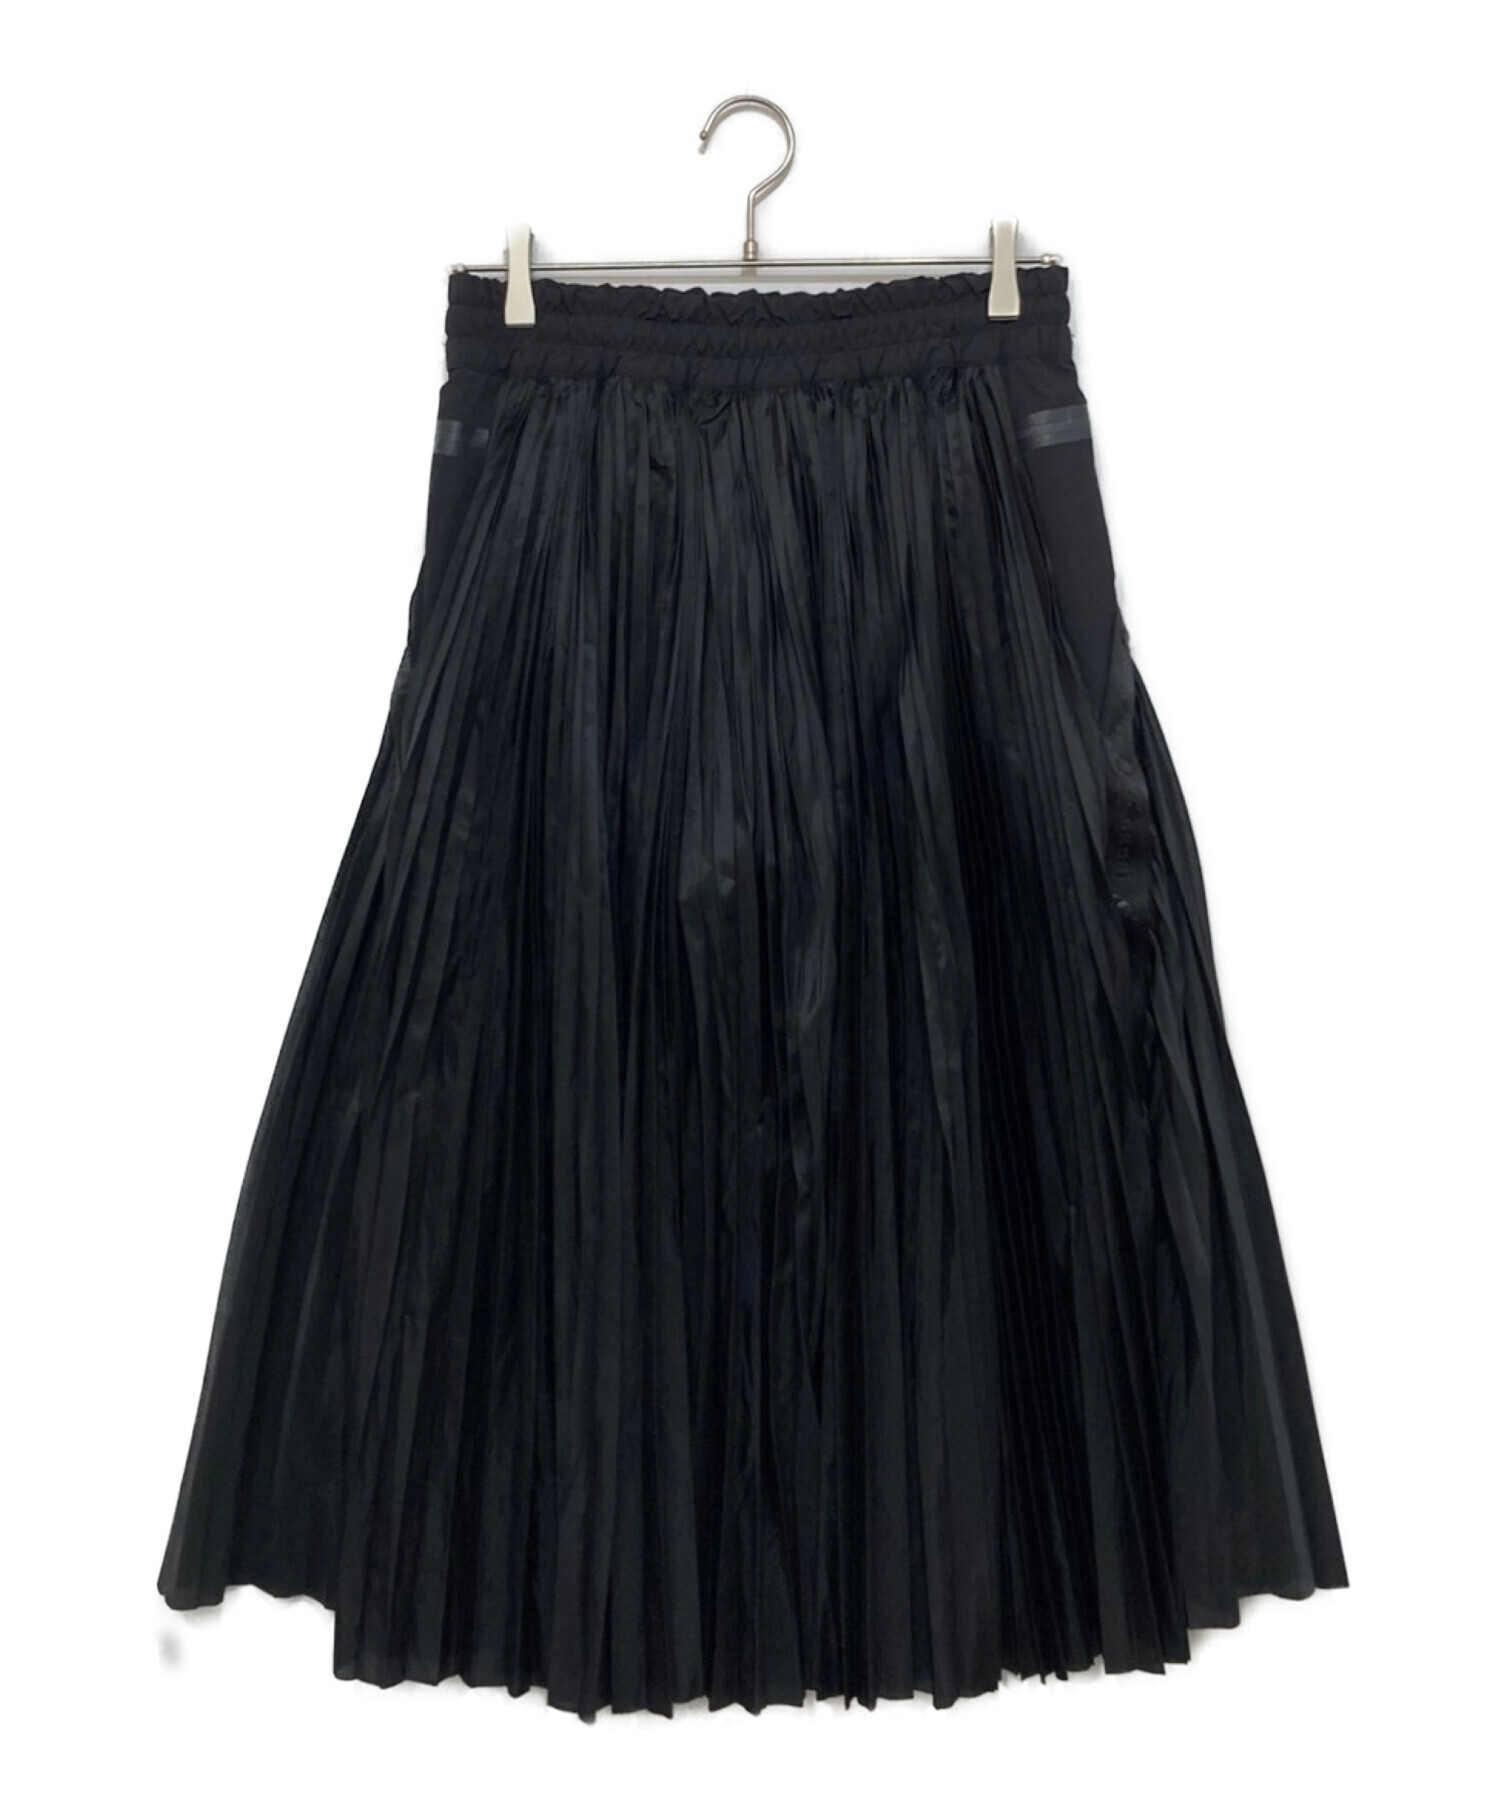 NIKE (ナイキ) sacai (サカイ) プリーツスカート ブラック サイズ:S